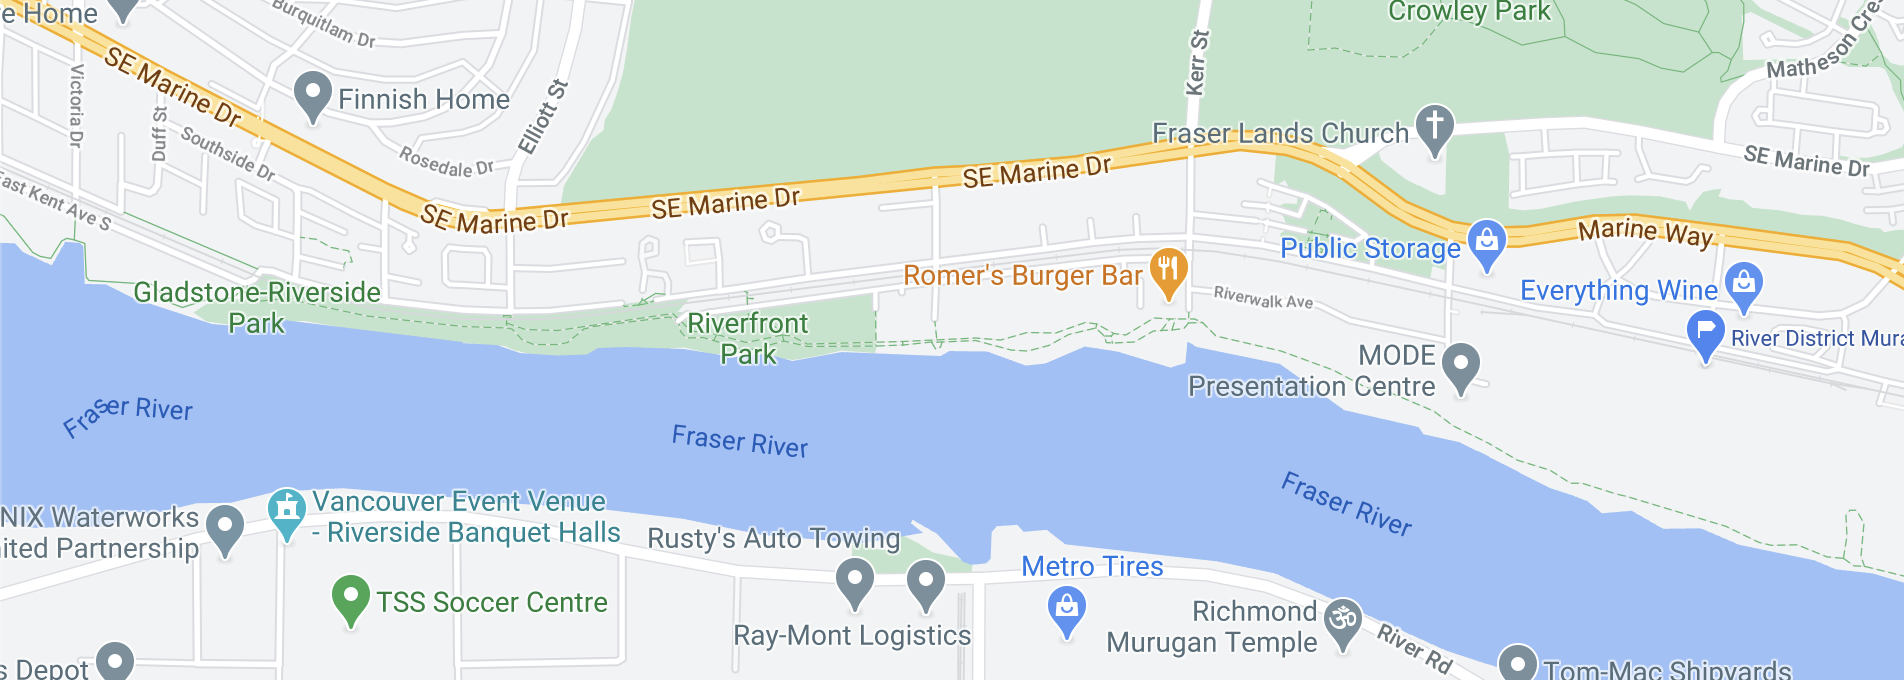 Google Maps Gladstone Riverside